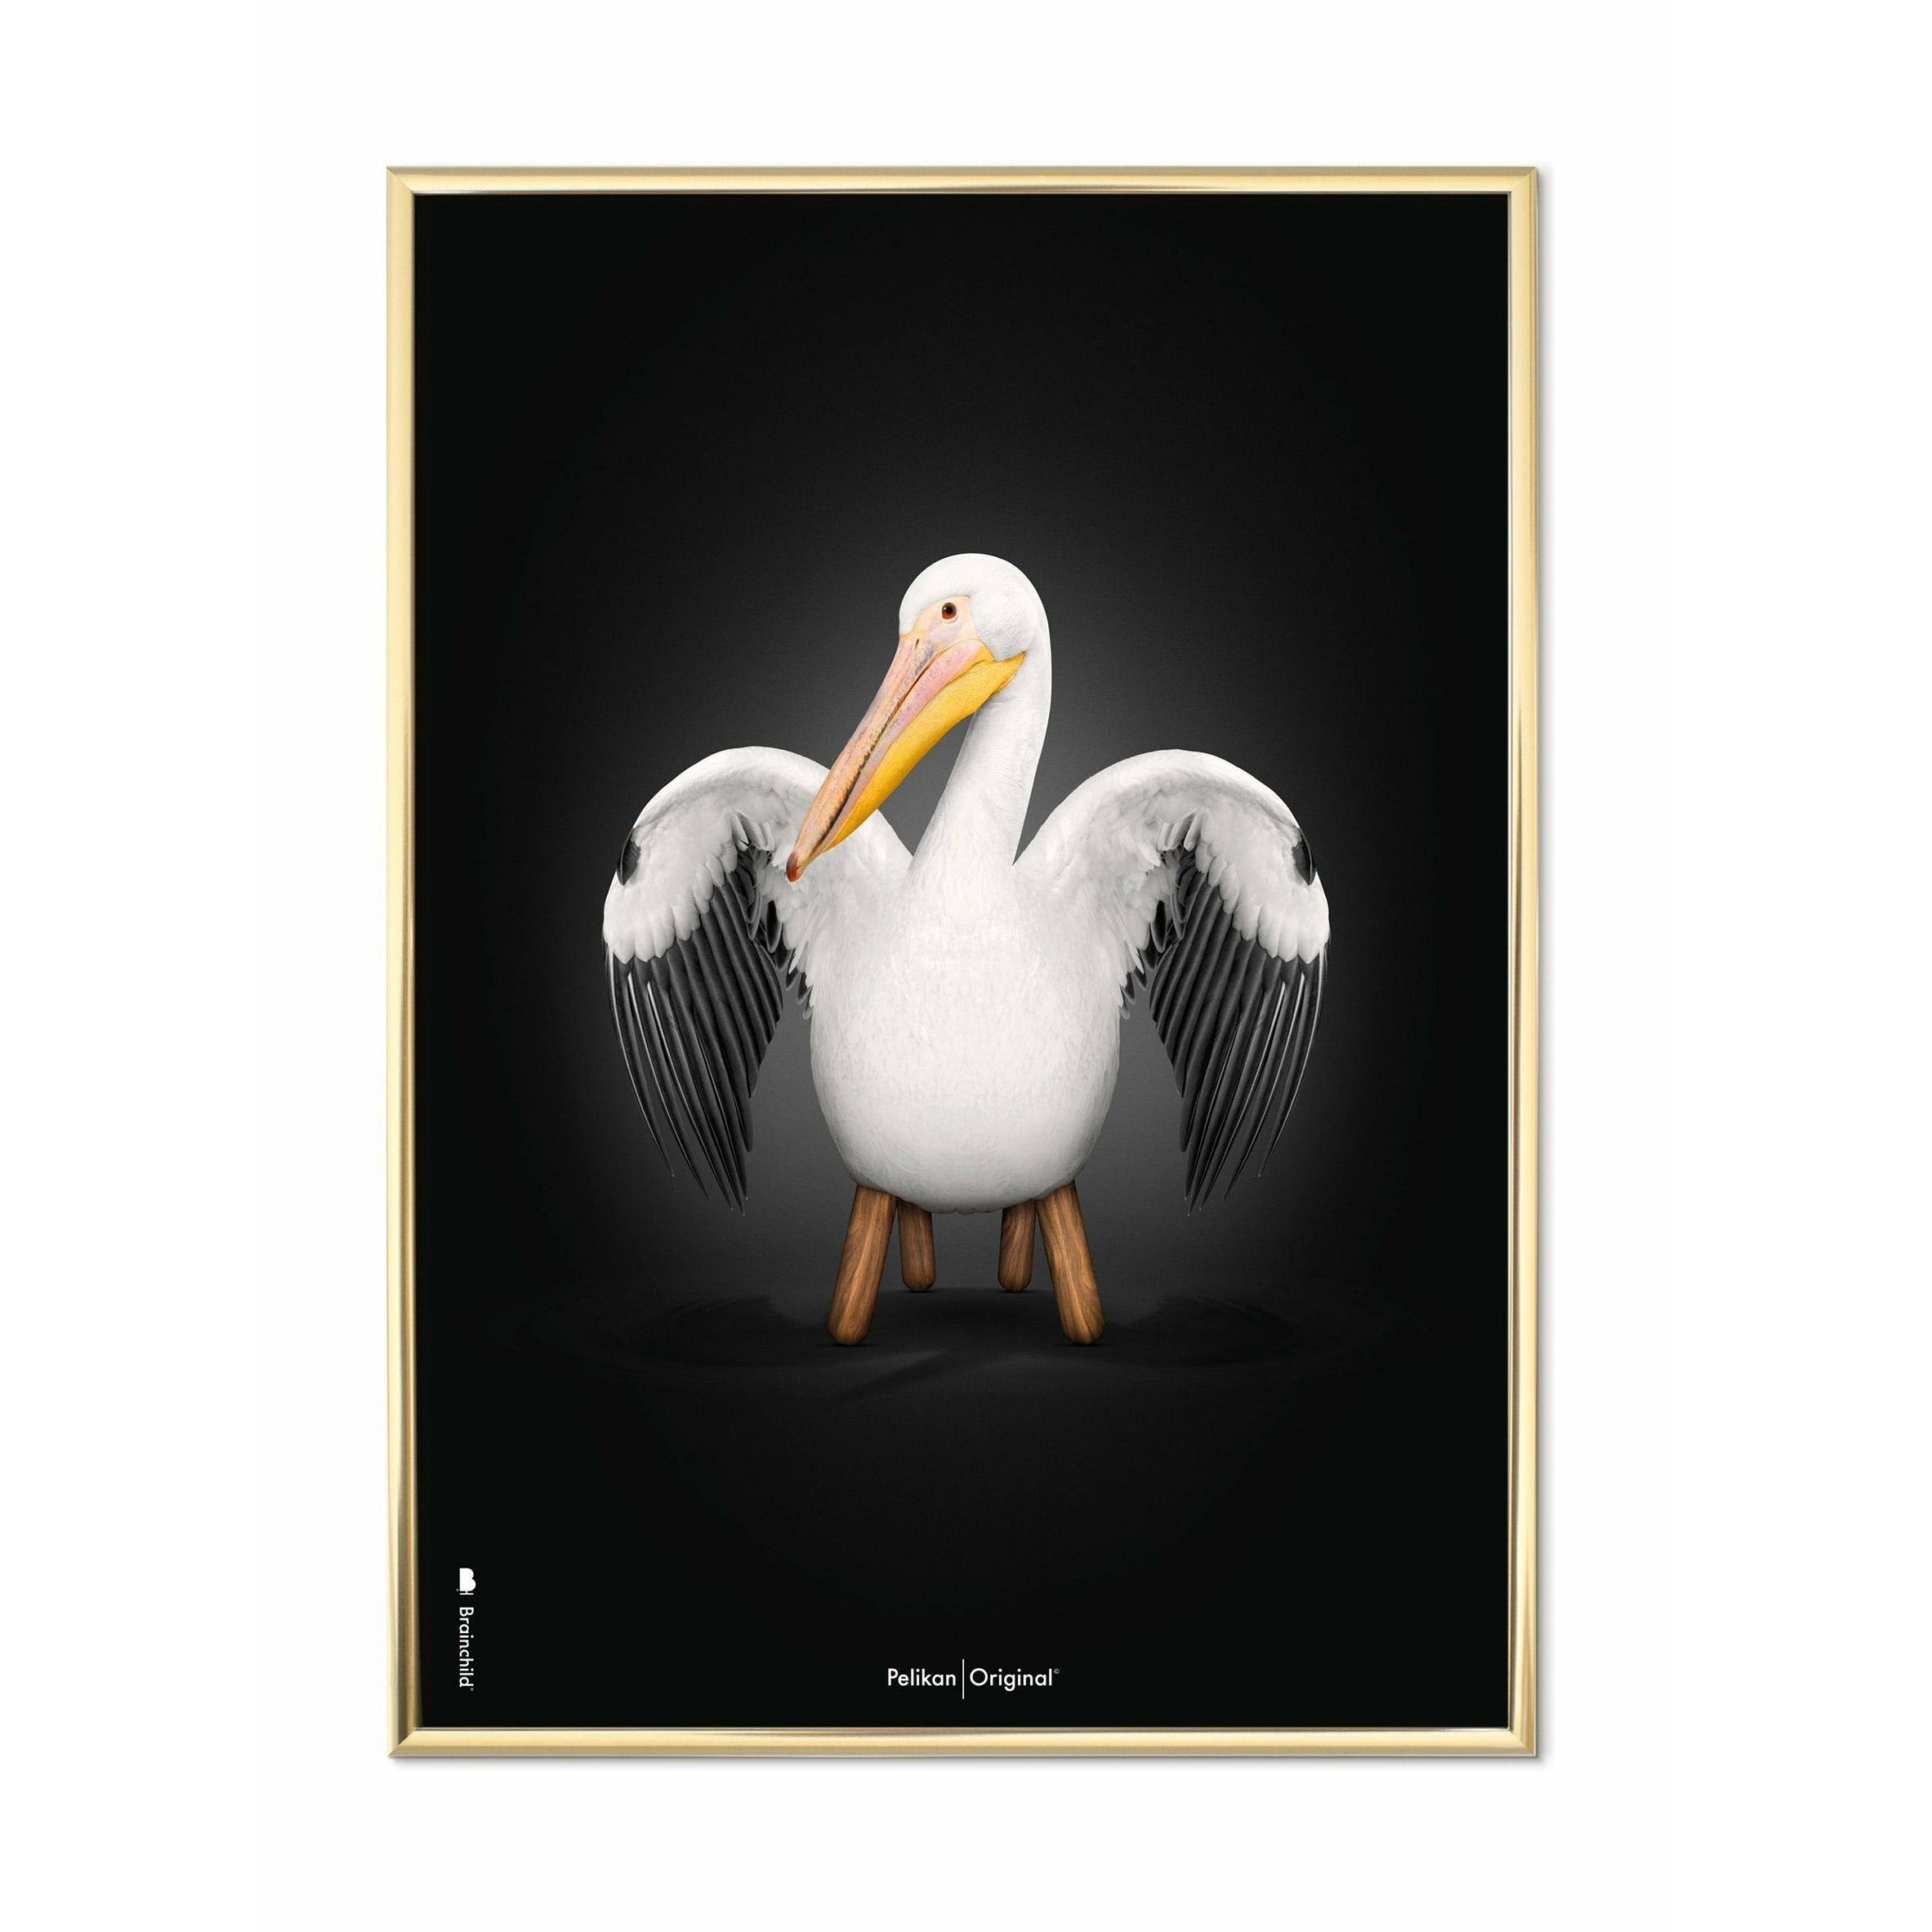 Brainchild Pelikan Classic Poster, messingfarbener Rahmen 70 x 100 cm, schwarzer Hintergrund